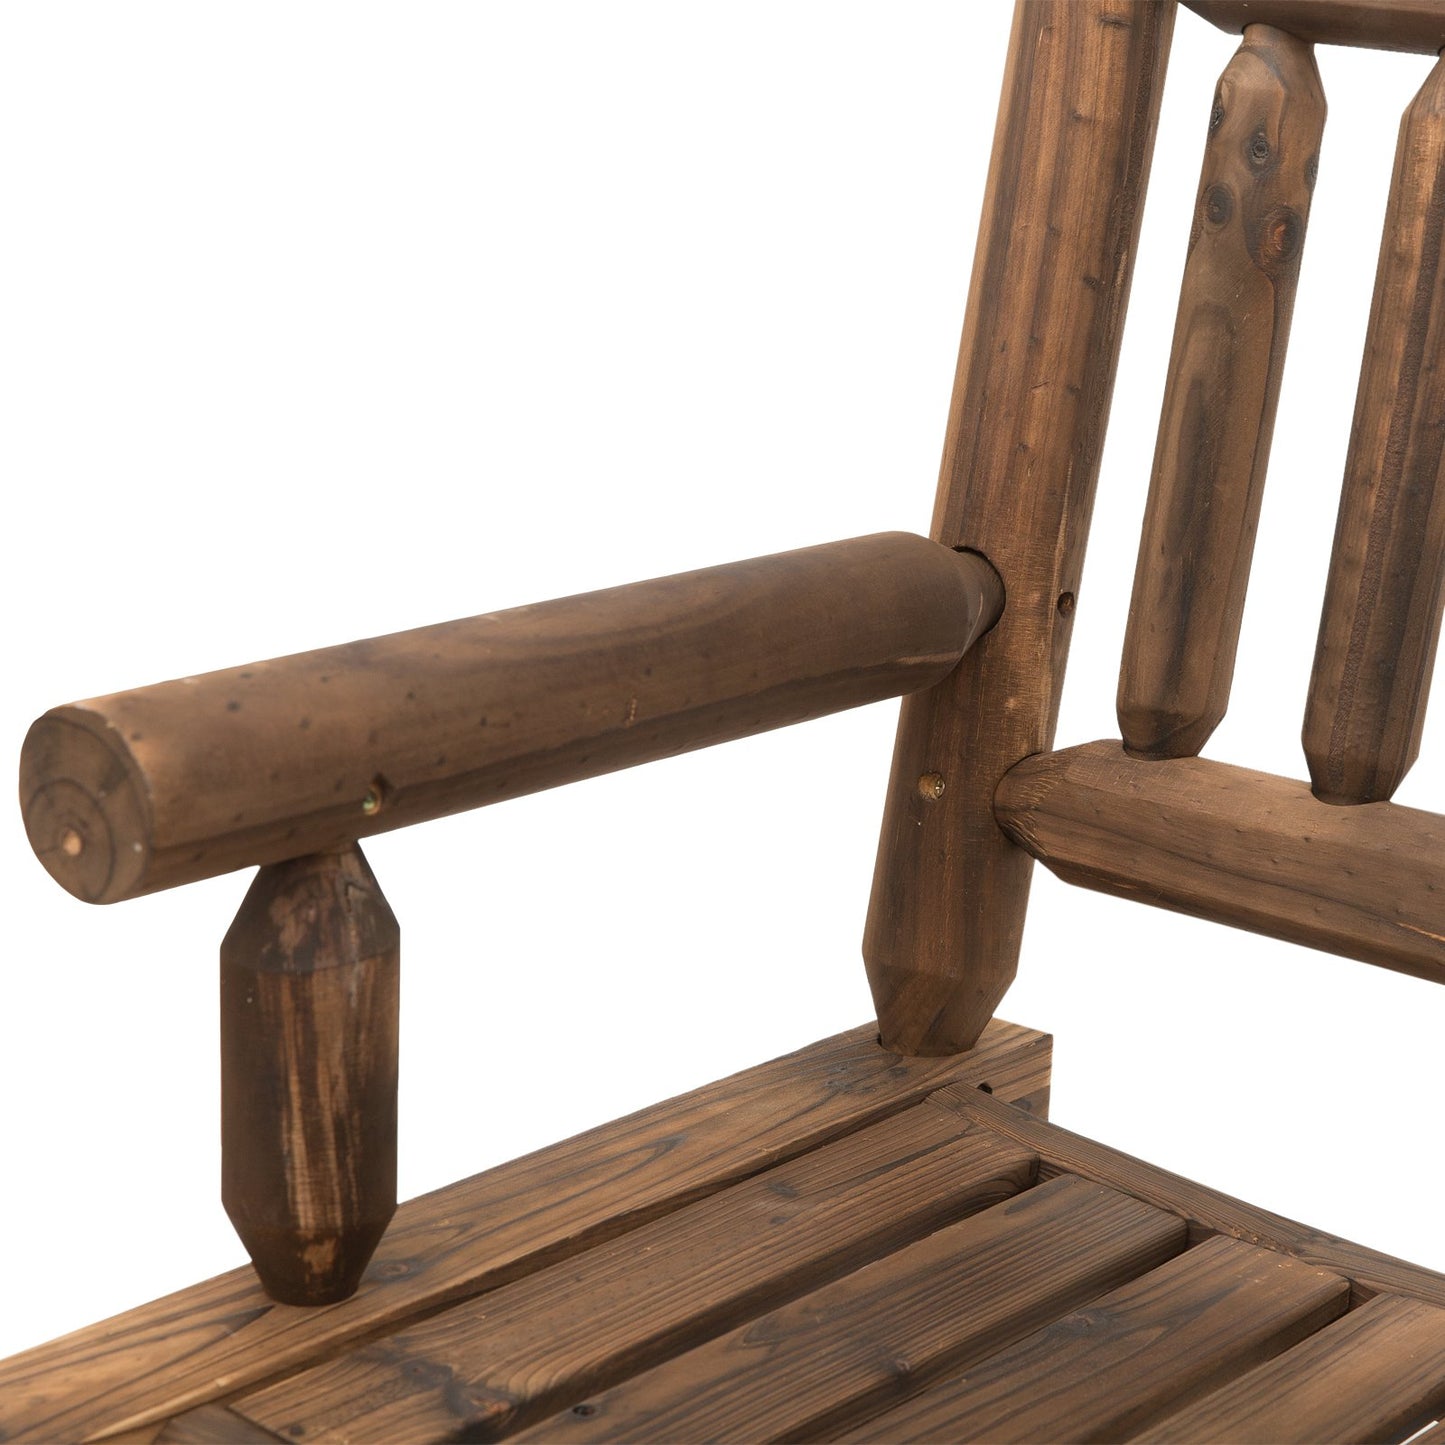 Outsunny 2-Seat Rocking Bench Wood Frame Rough-Cut Log Loveseat Slatted Dark Stain Brown